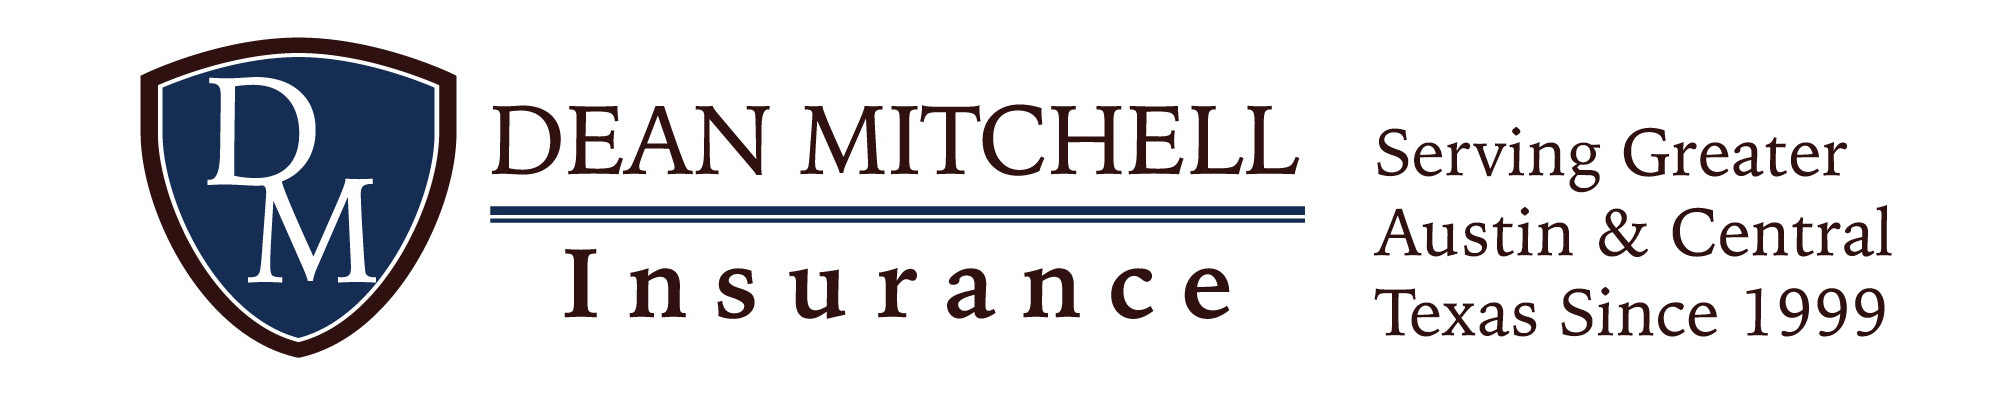 Dean Mitchell Insurance